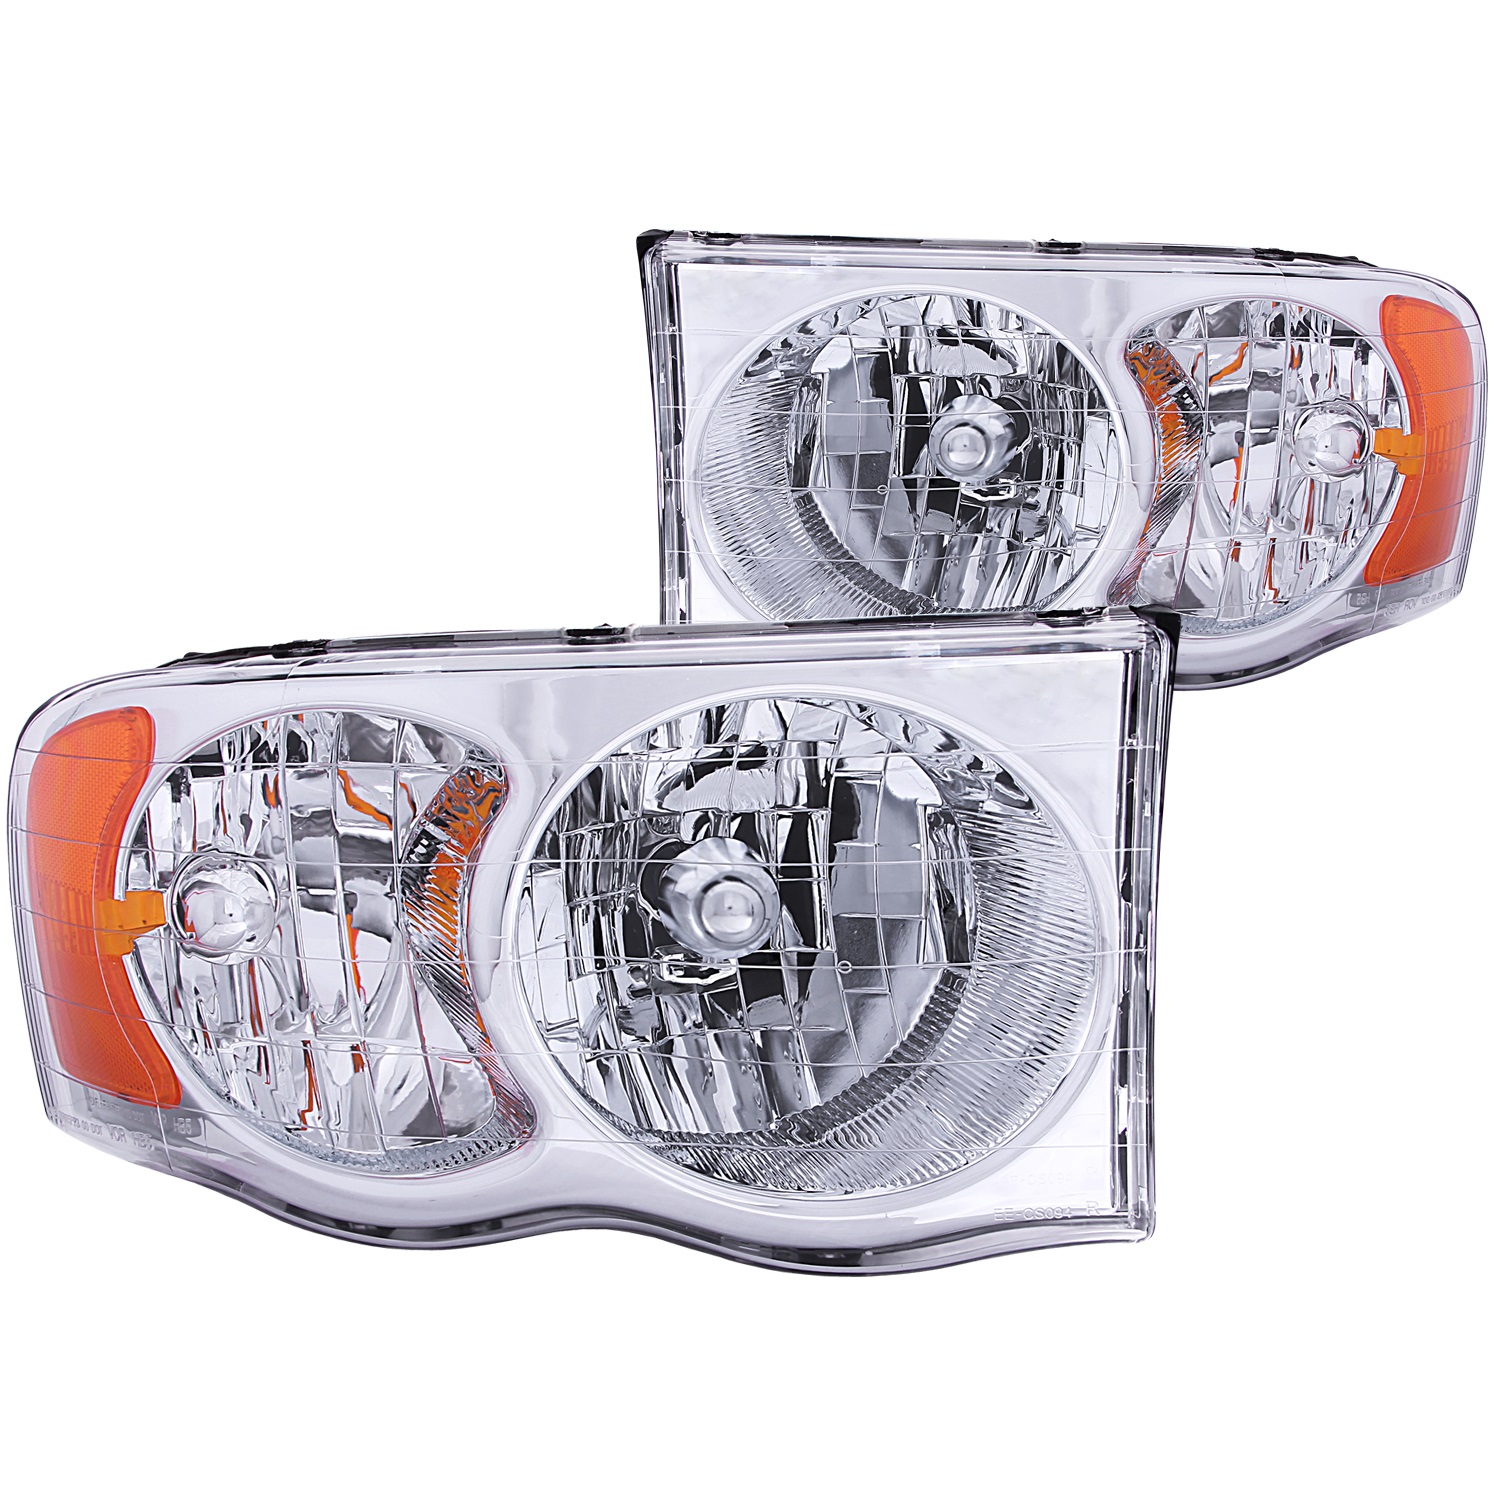 Anzo USA Anzo USA 111076 Crystal Headlight Set Fits 02-06 Ram 1500 Ram 2500 Ram 3500